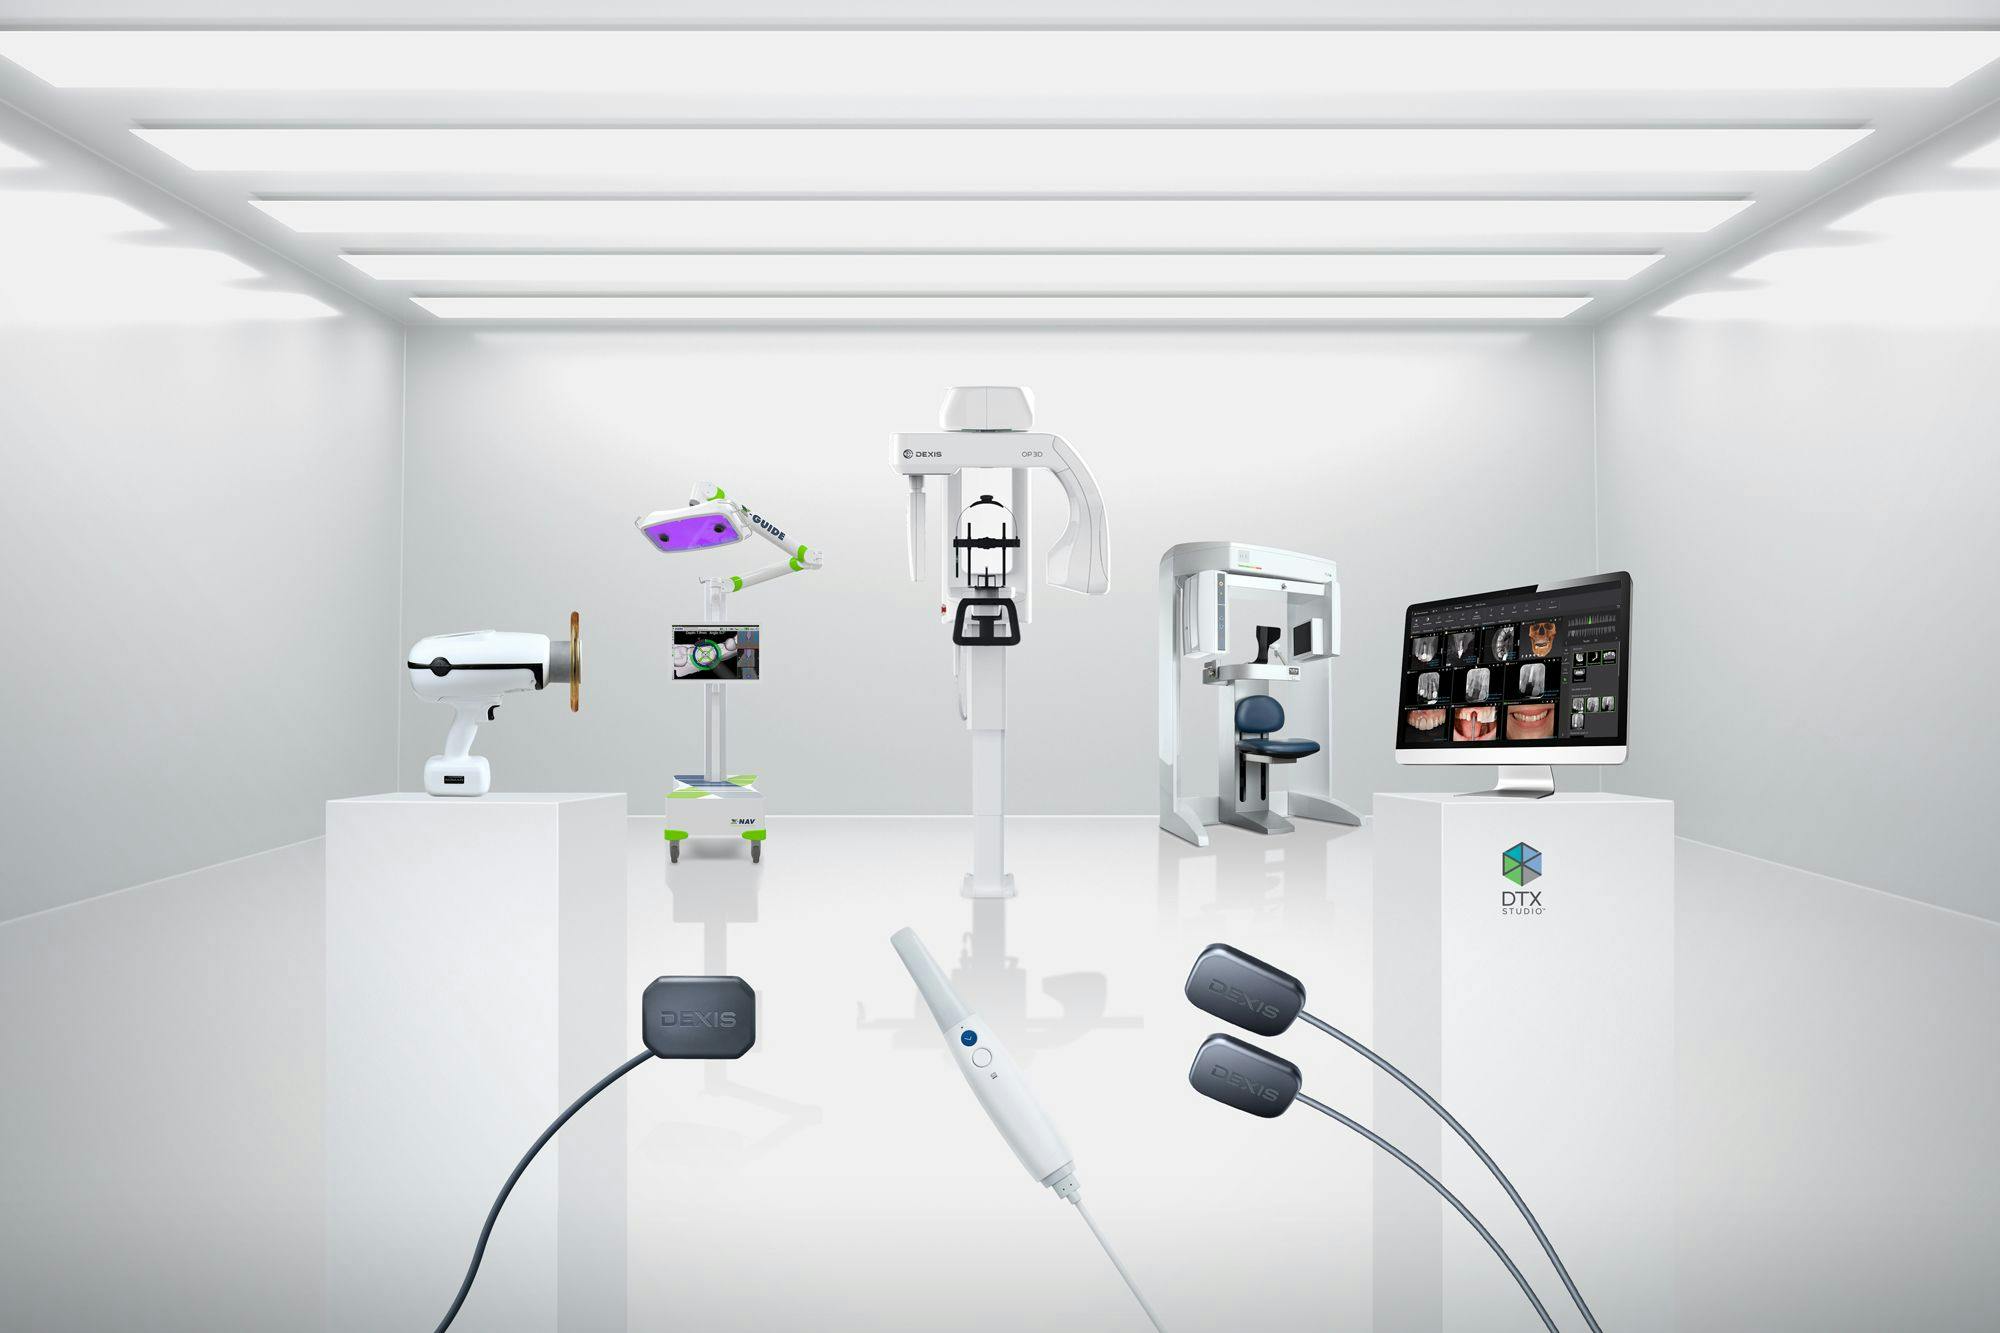 Envista Announces Dental Digital Imaging Solutions Re-Brand to DEXIS